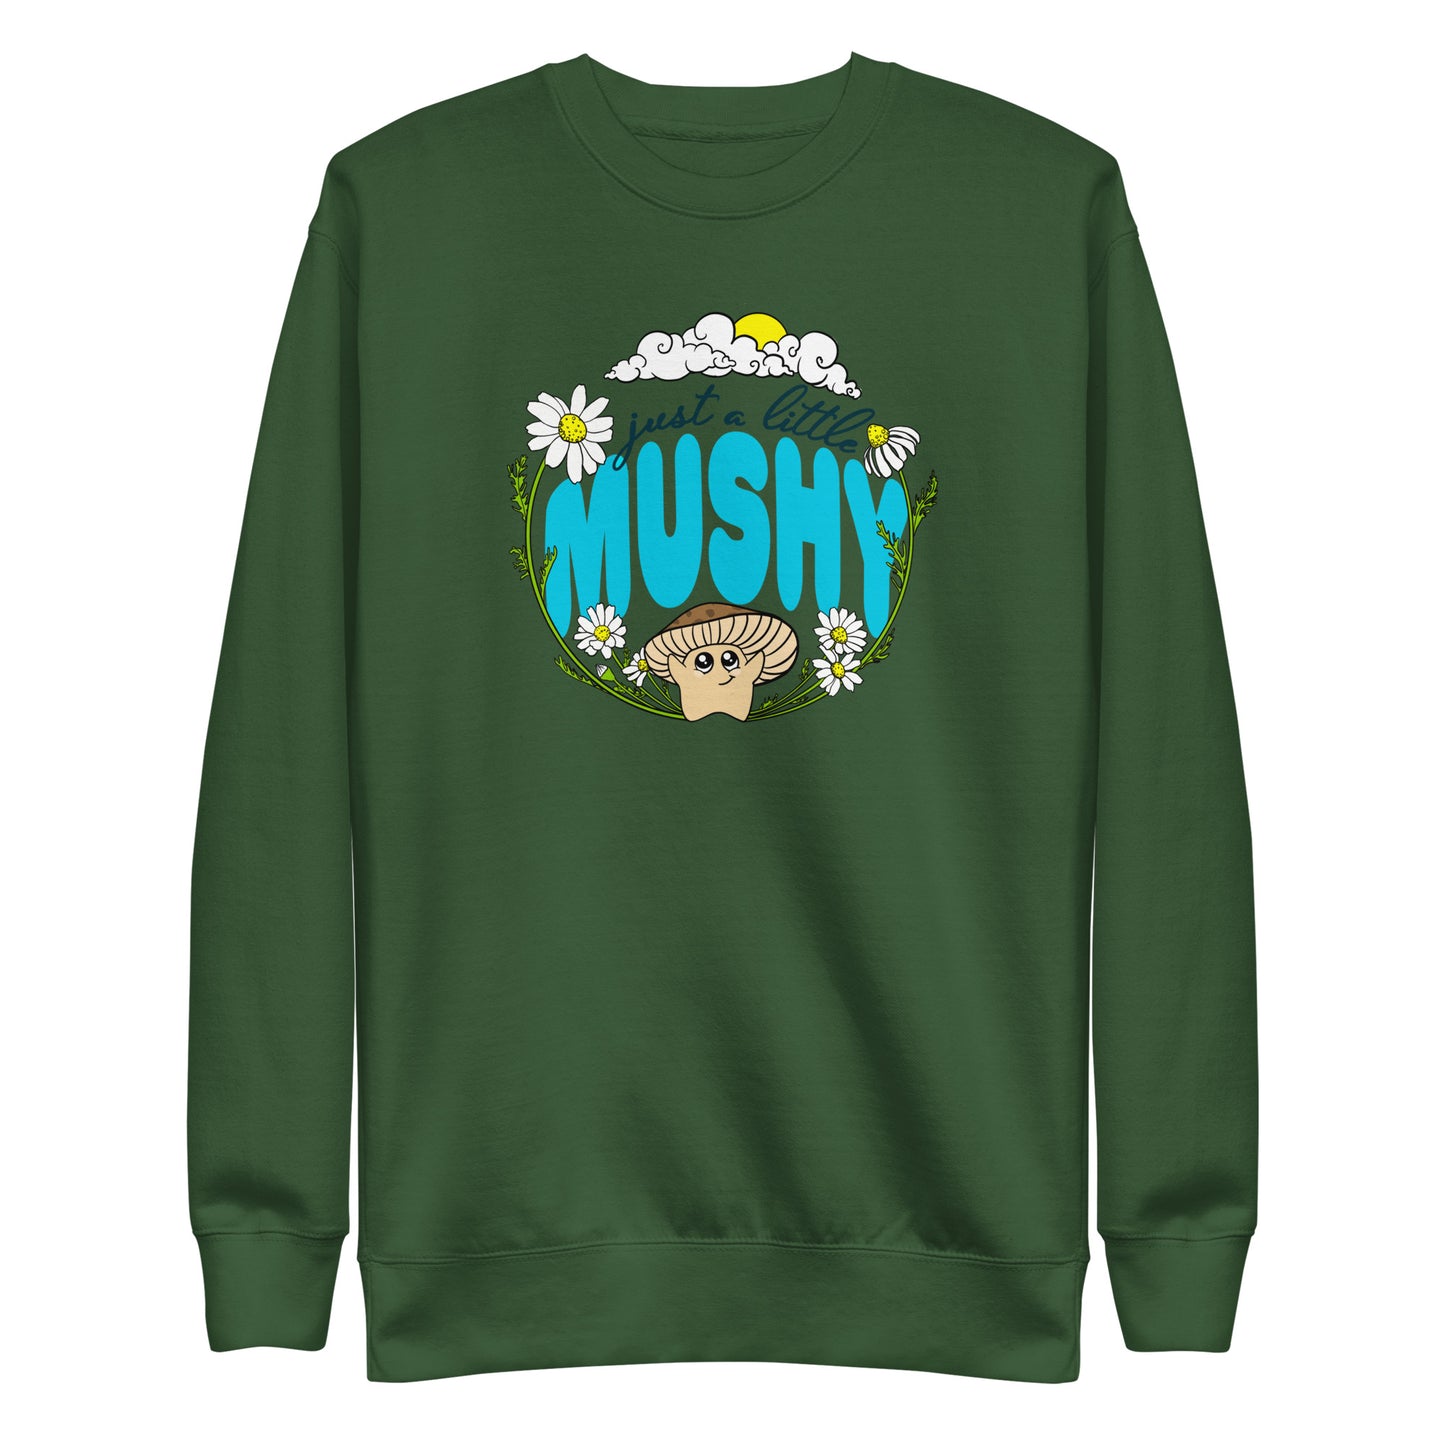 Just A Little Mushy | Unisex Sweatshirt | Cute Mushroom Apparel